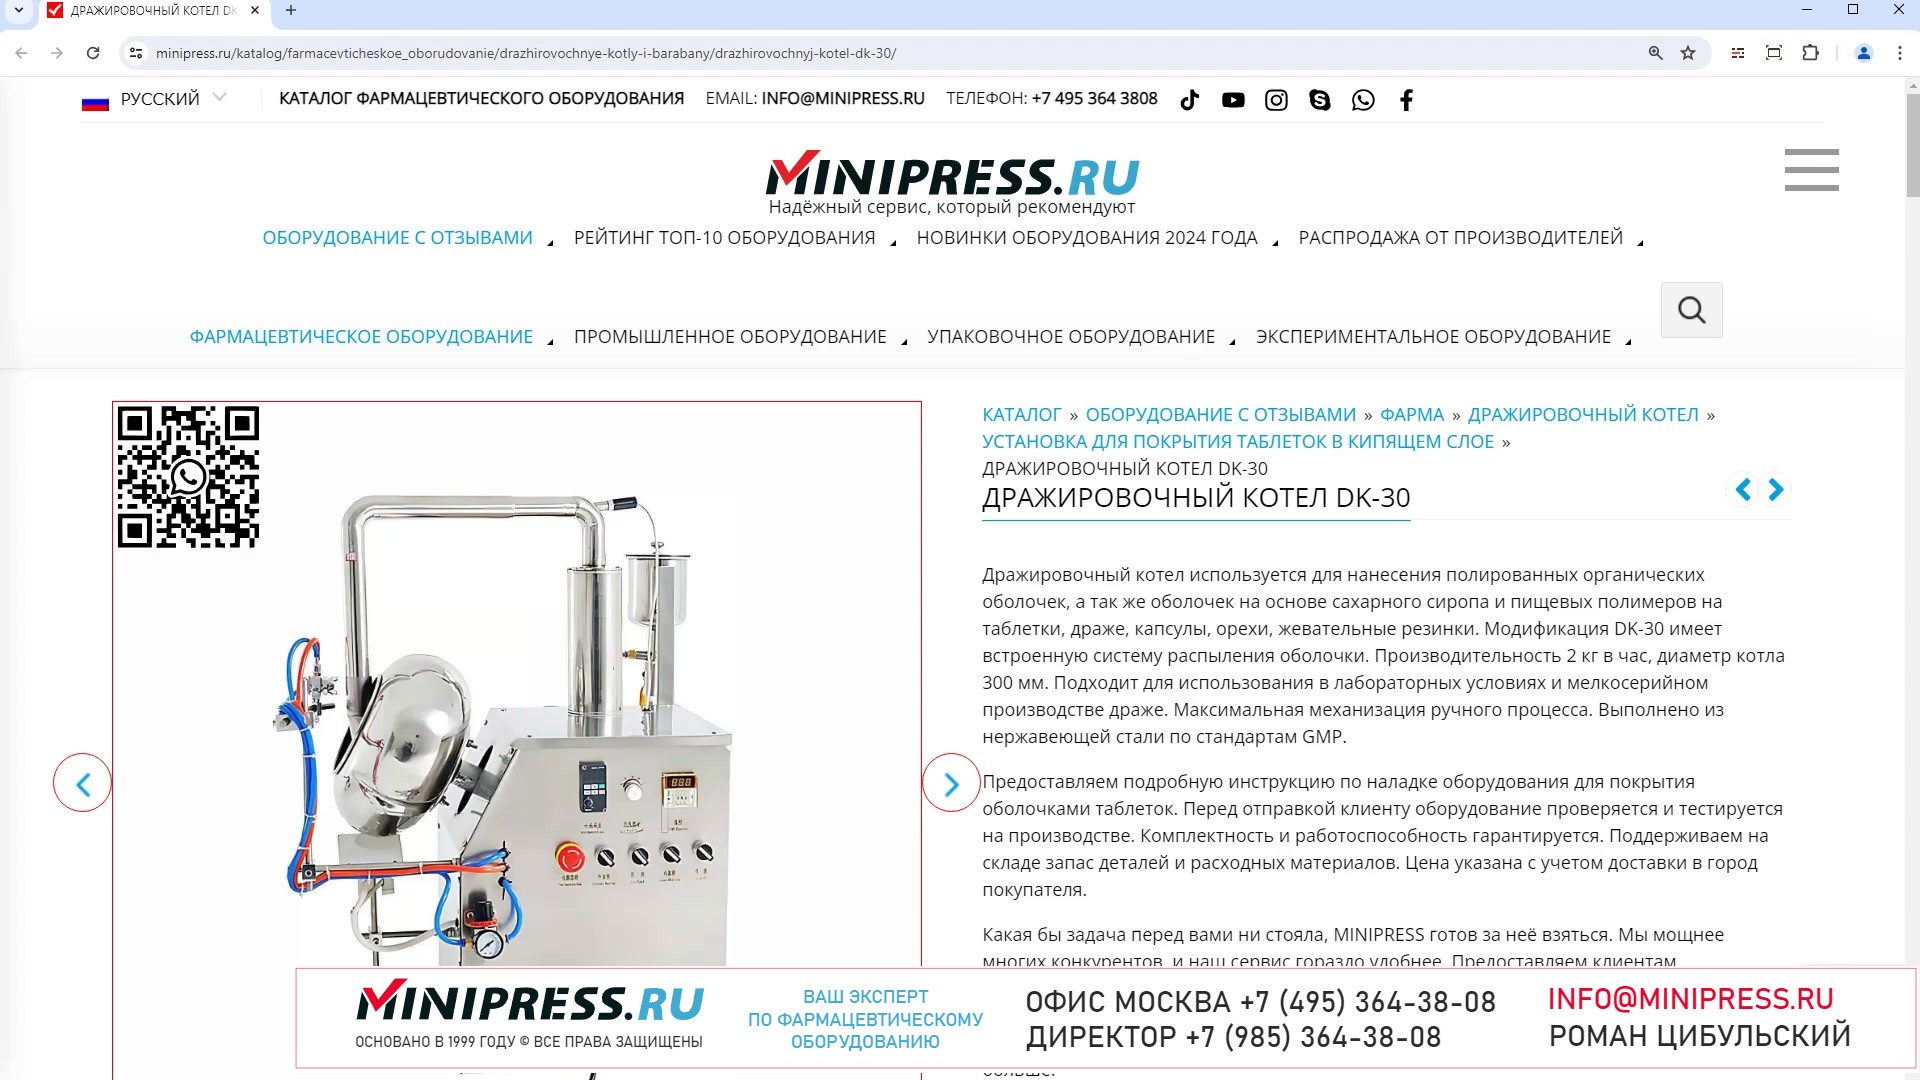 Minipress.ru Дражировочный котел DK-30